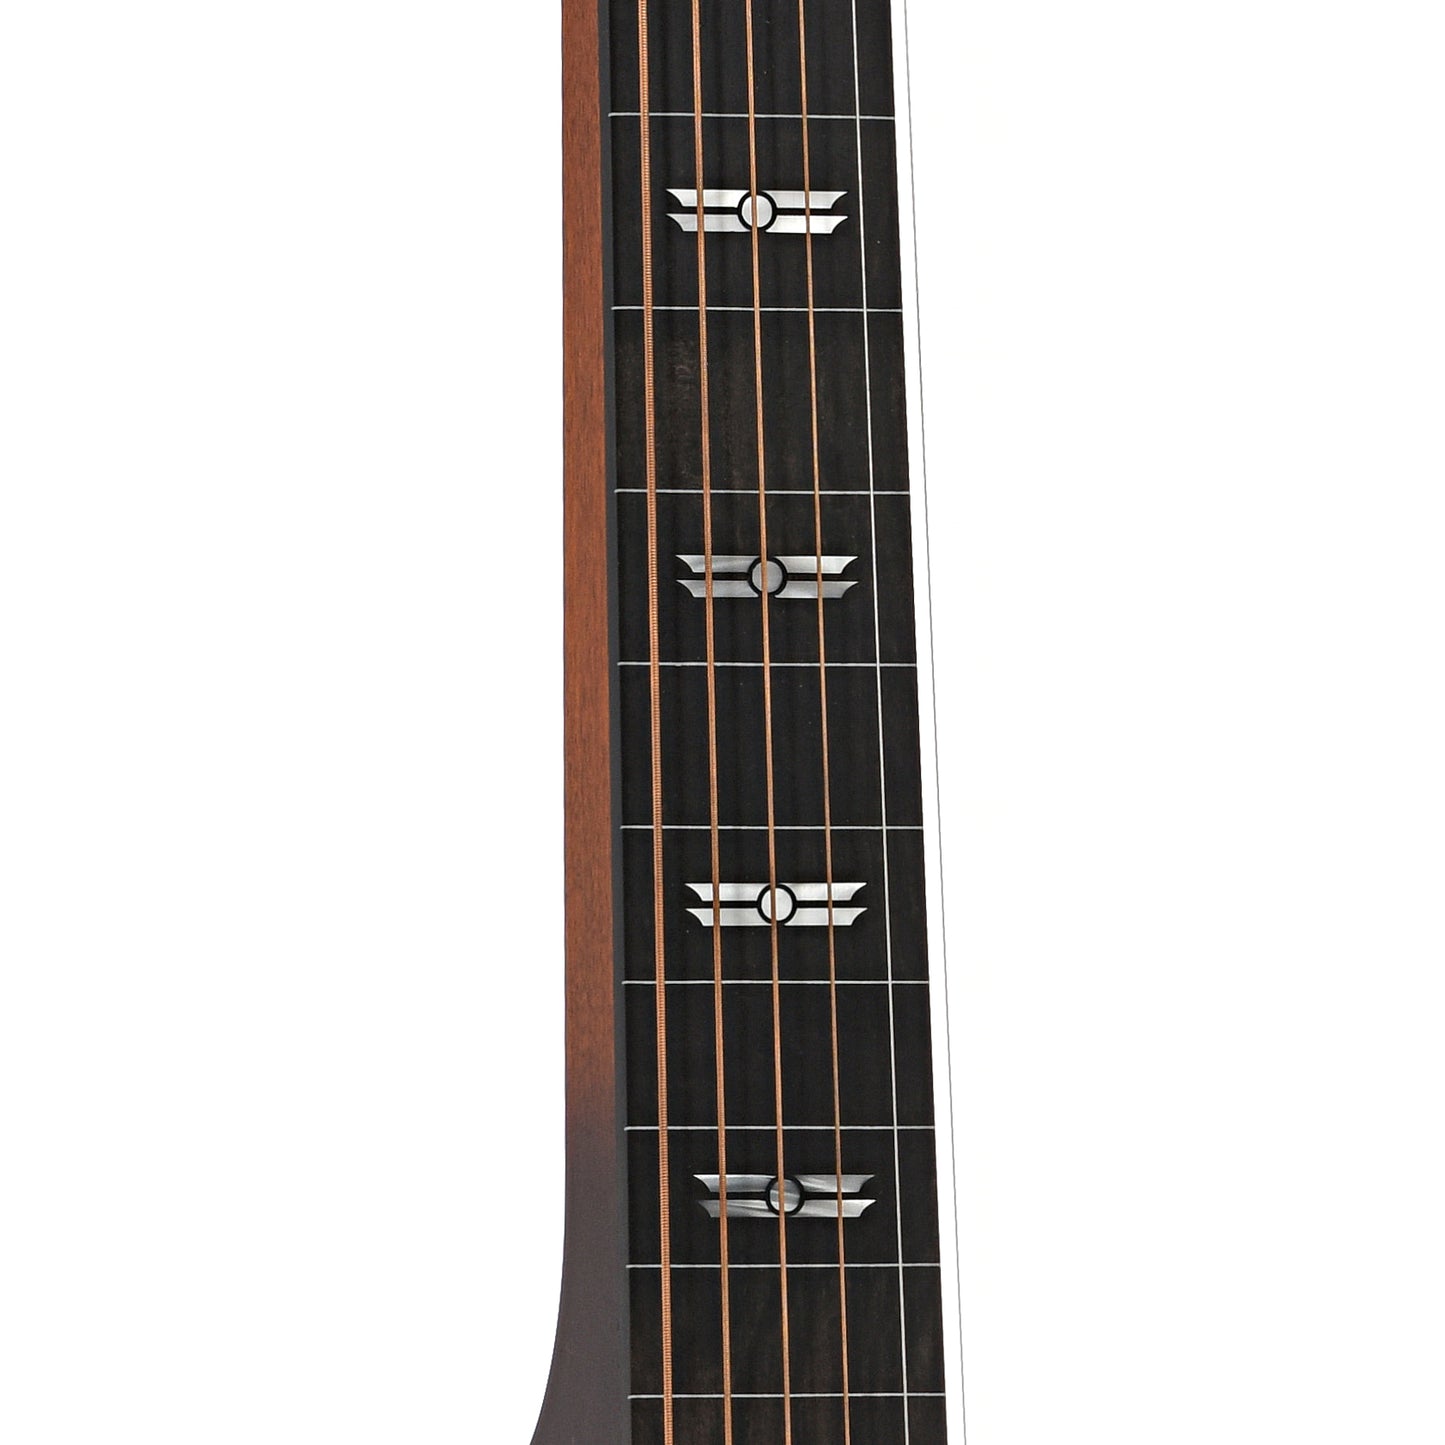 Fretboard of Beard Josh Swift Standard Squareneck Resonator Guitar with Signature Inlays